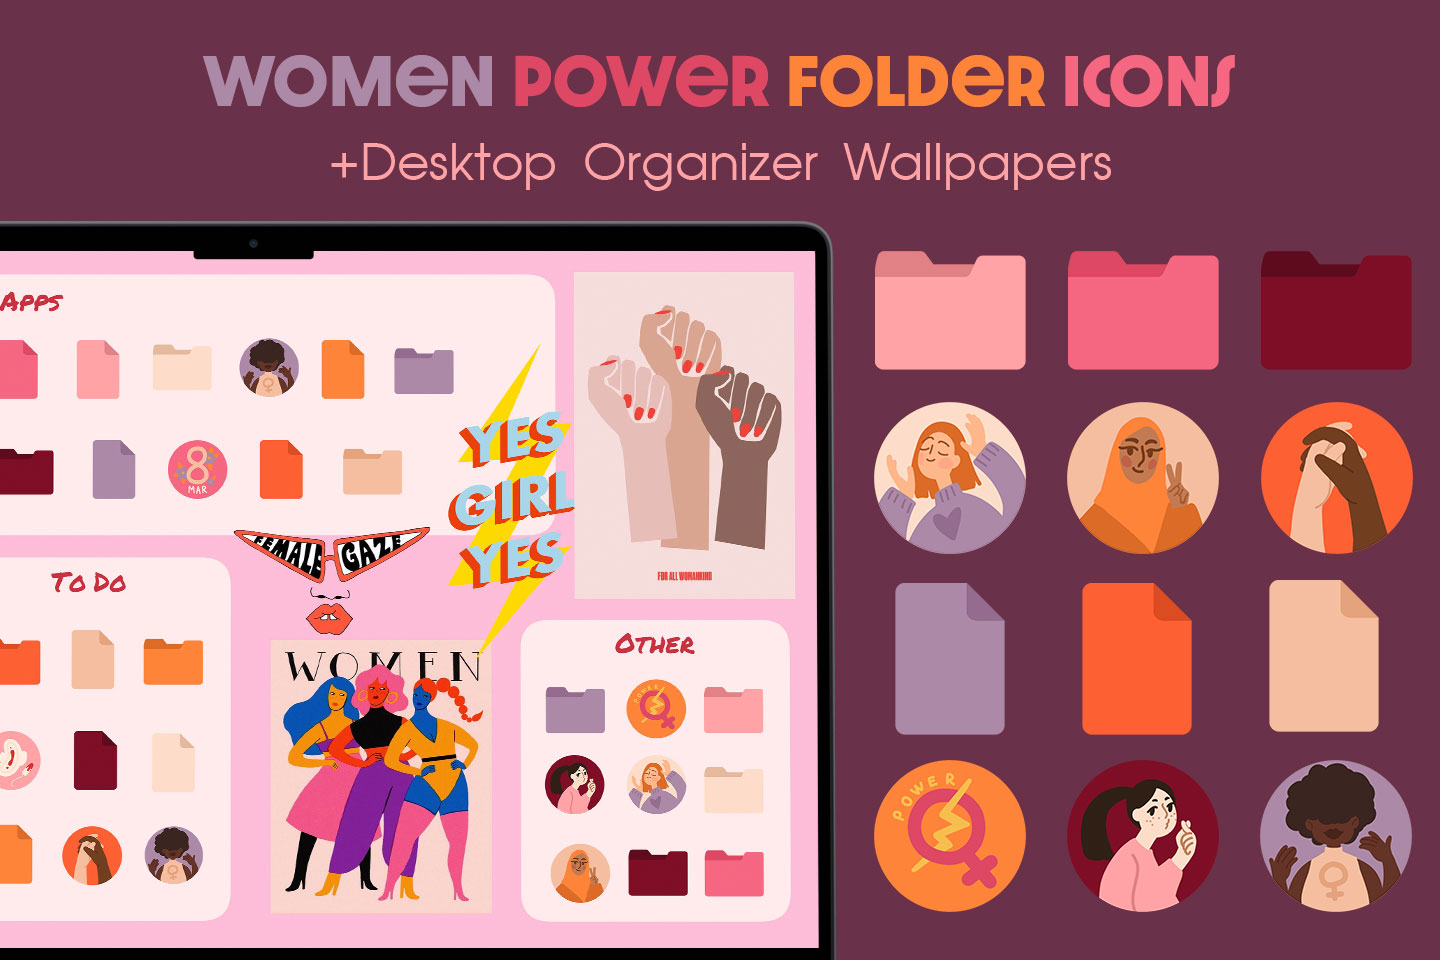 Paquete de iconos de carpetas de poder para mujeres